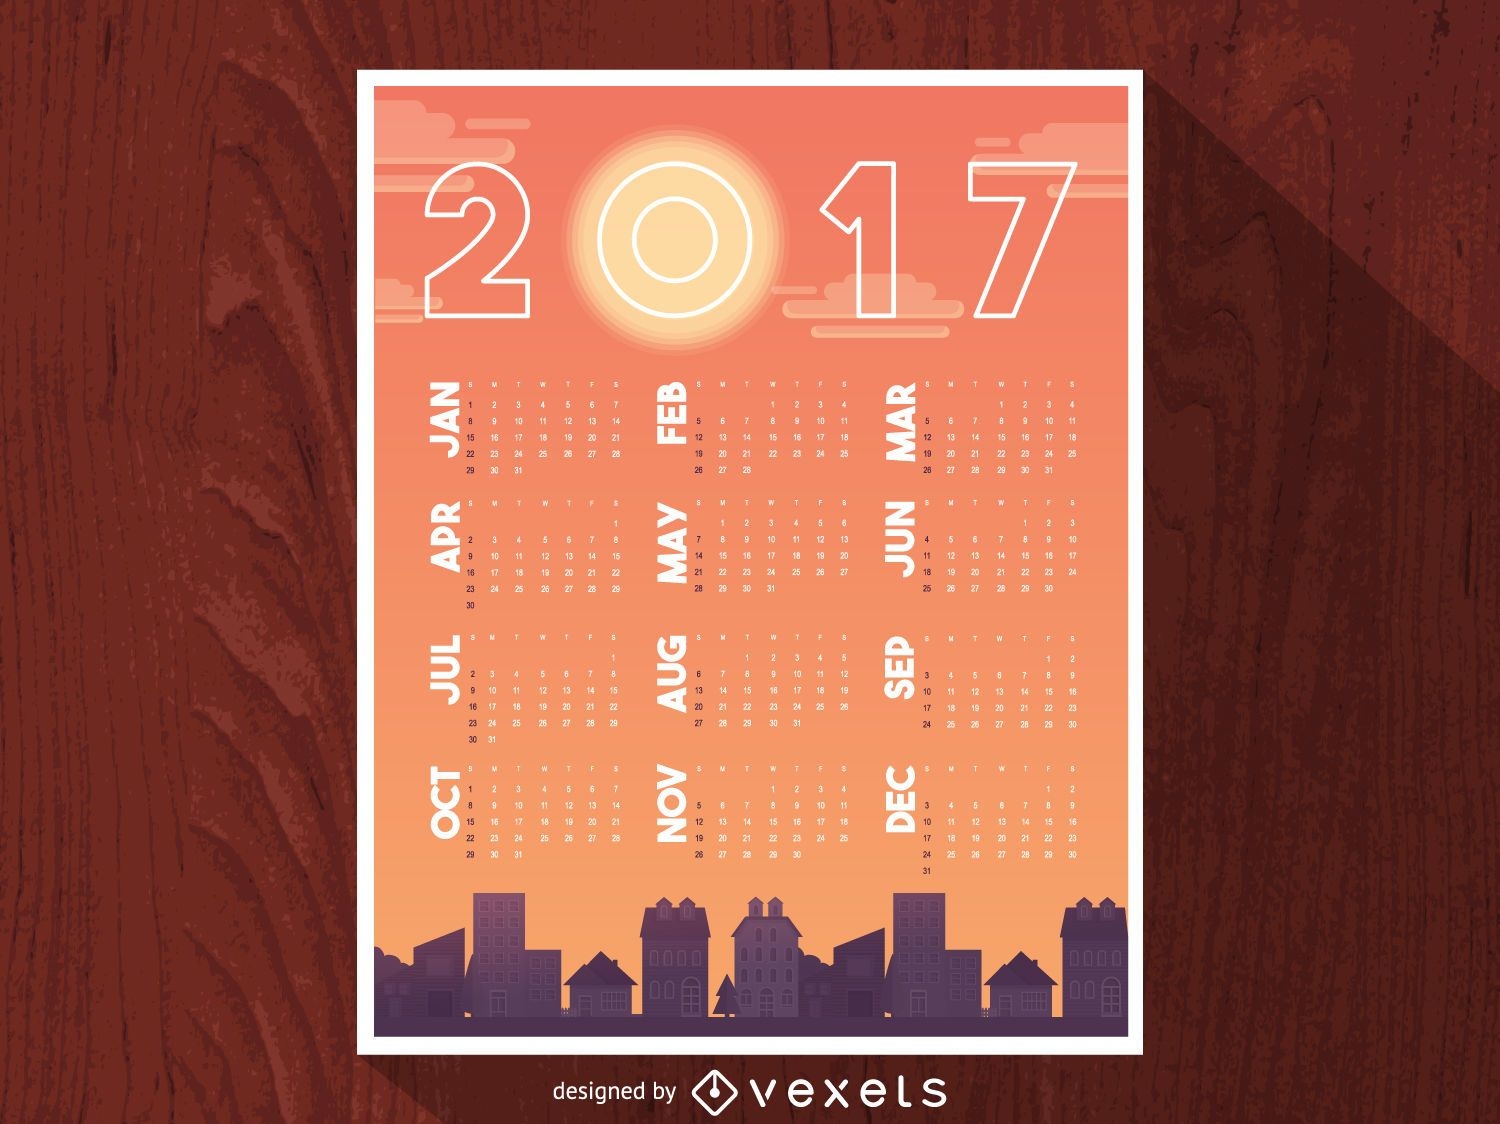 2017 calendario siluetas de paisaje urbano